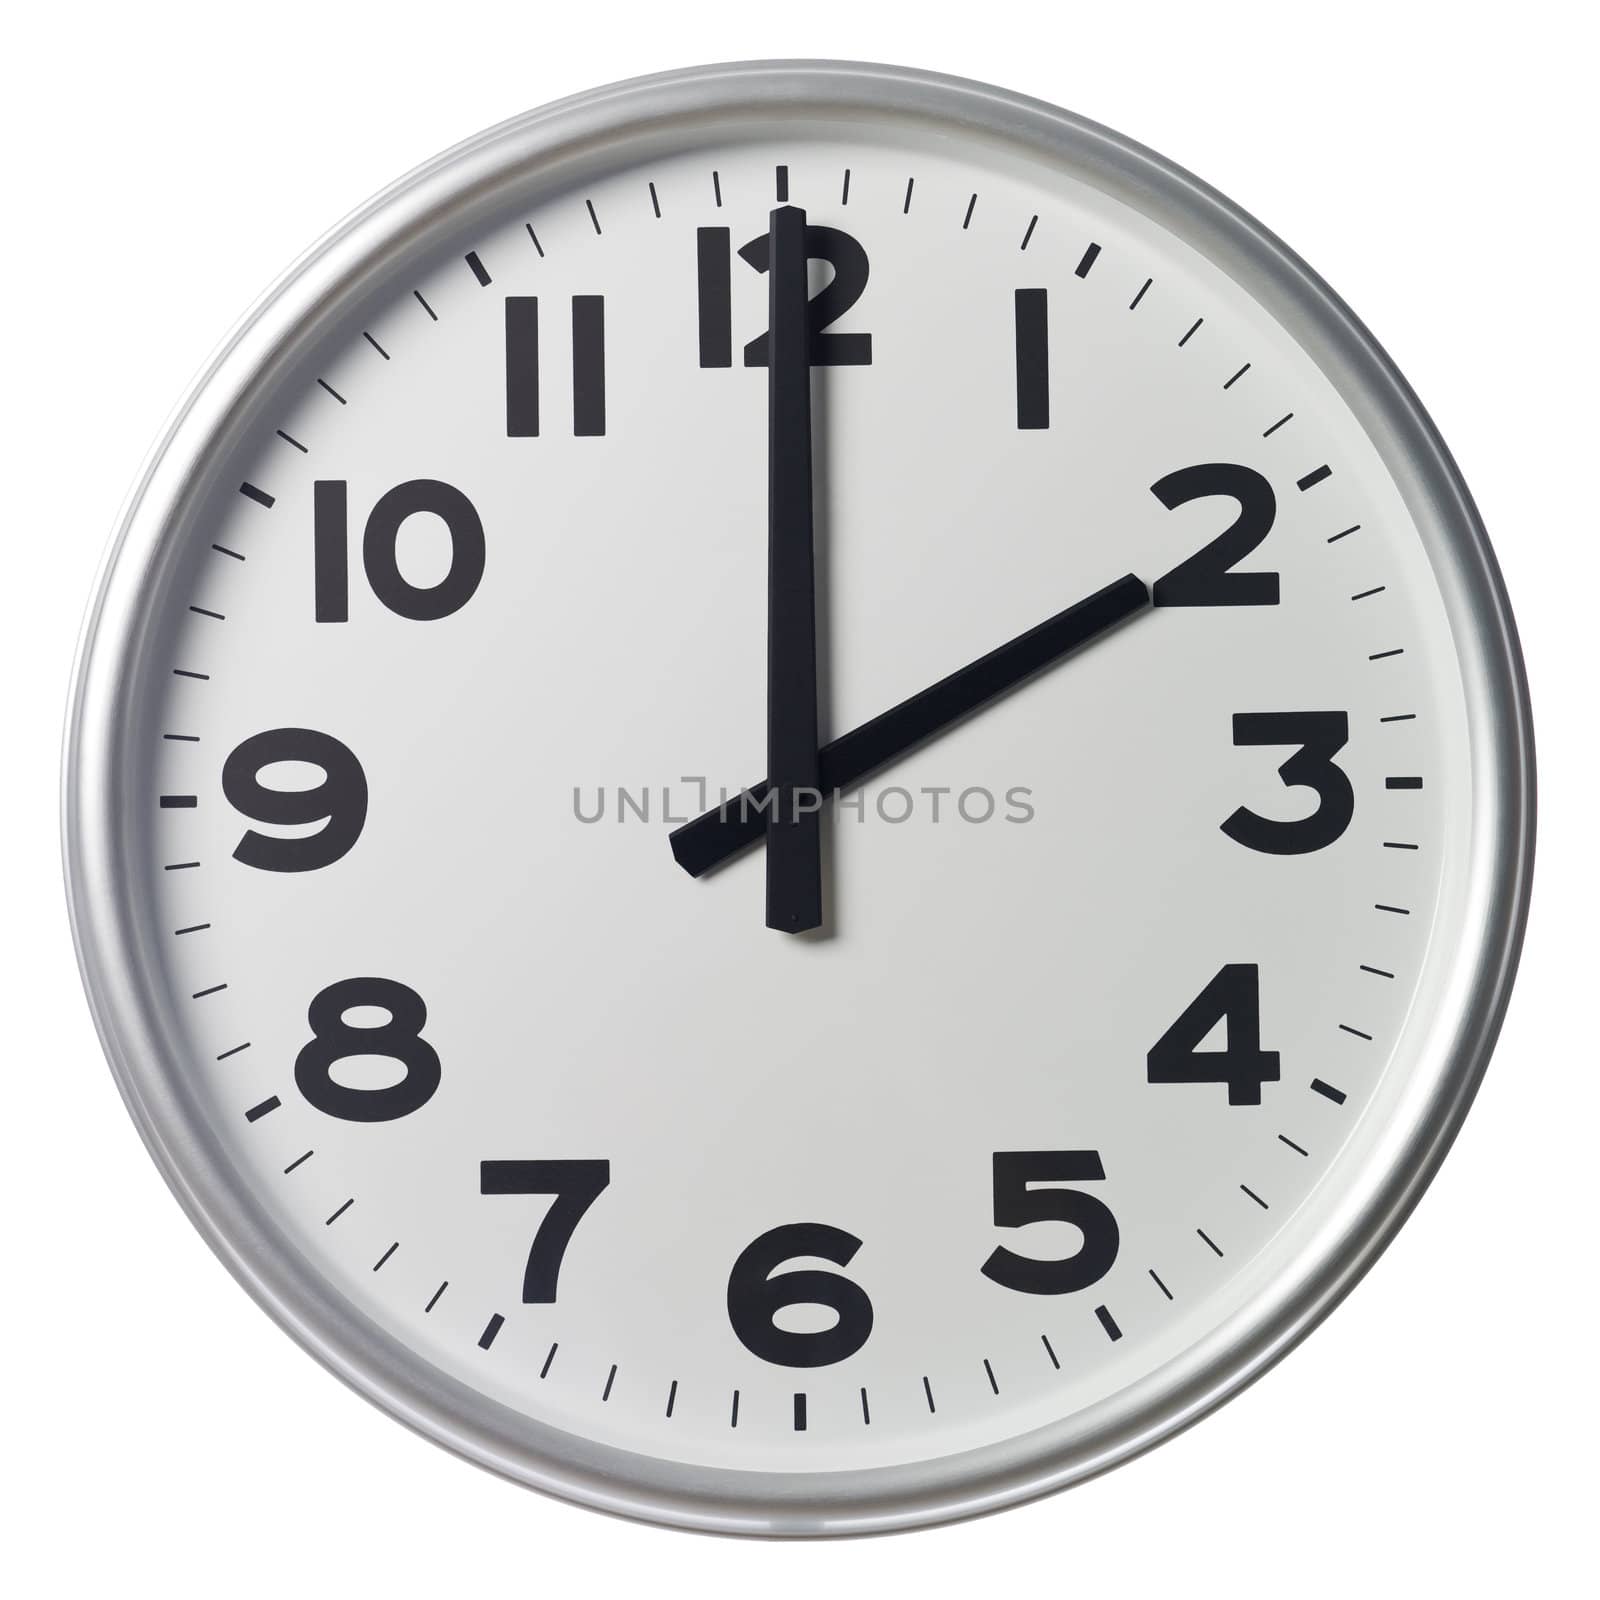 Two O'Clock by gemenacom